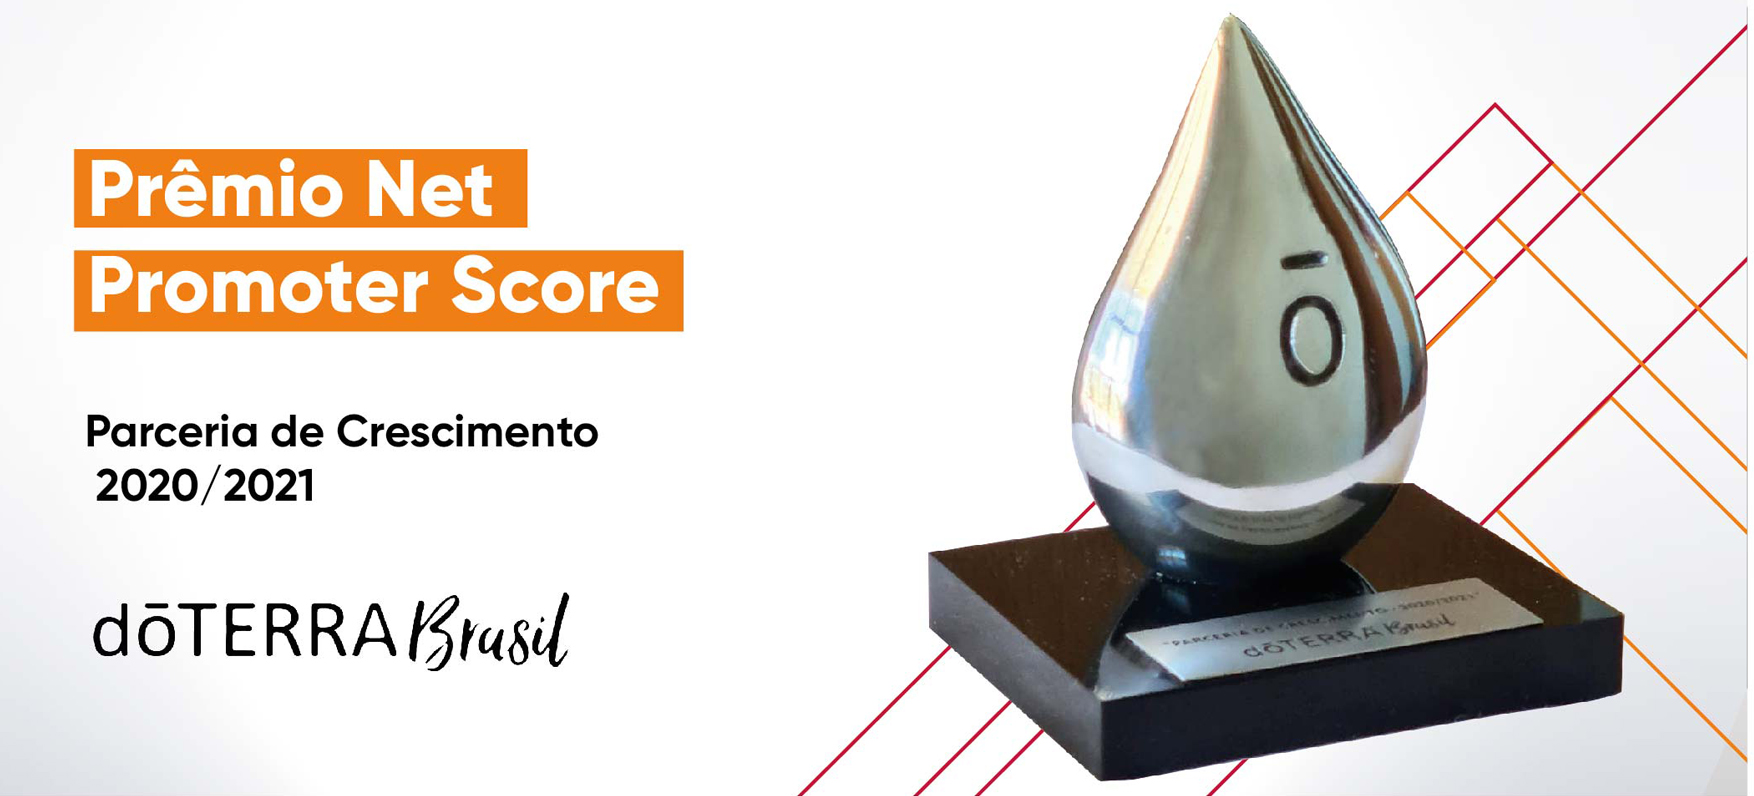 Prêmio Net Promoter Score doTERRA